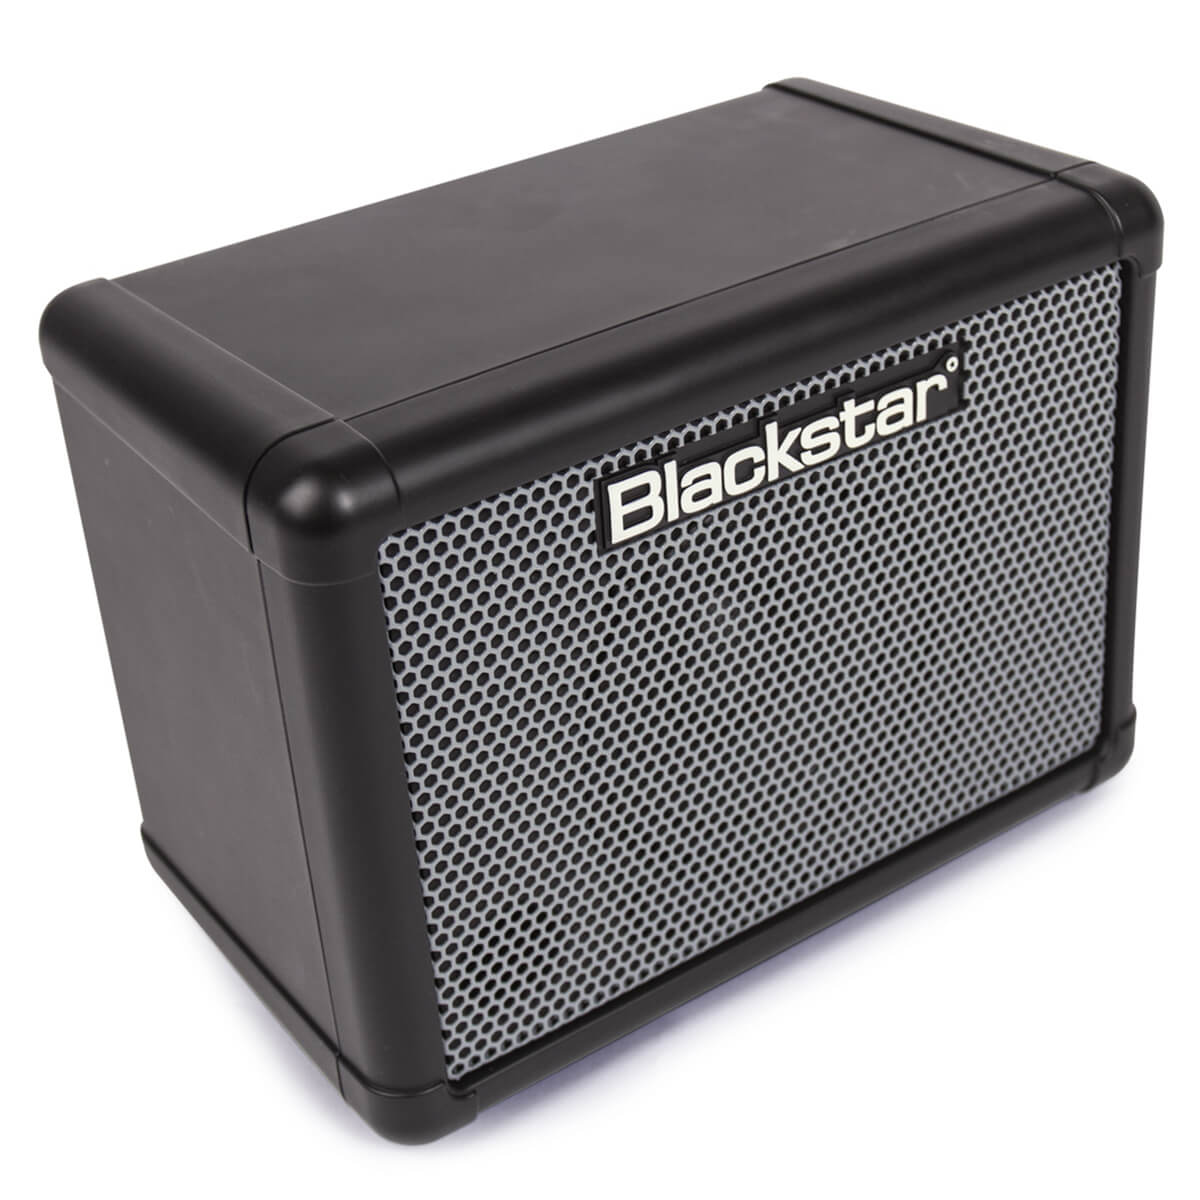 Blackstar Amps FLY 3 bass mini amplifier right